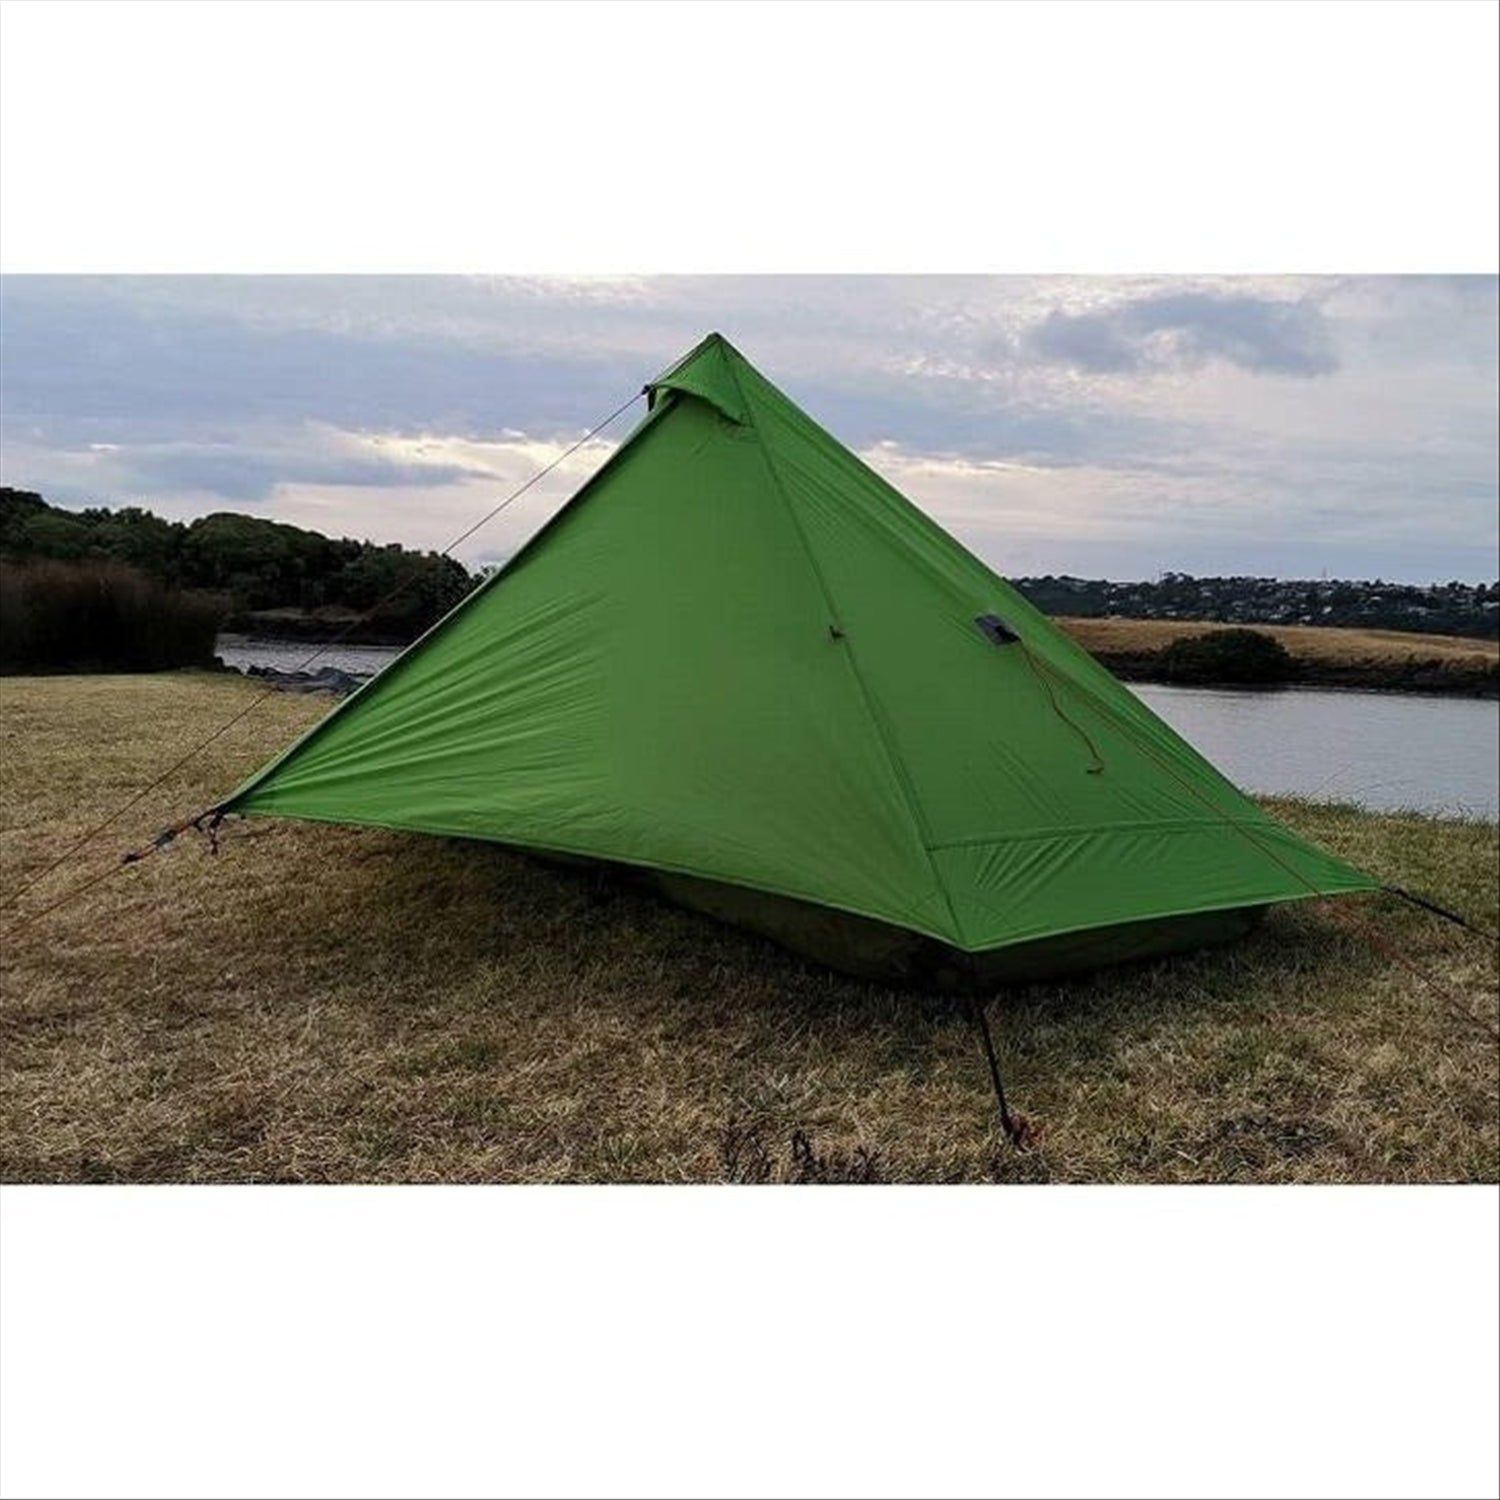 Orson Orson Odyssey - Silnylon 1 person tent, single wall, 990g